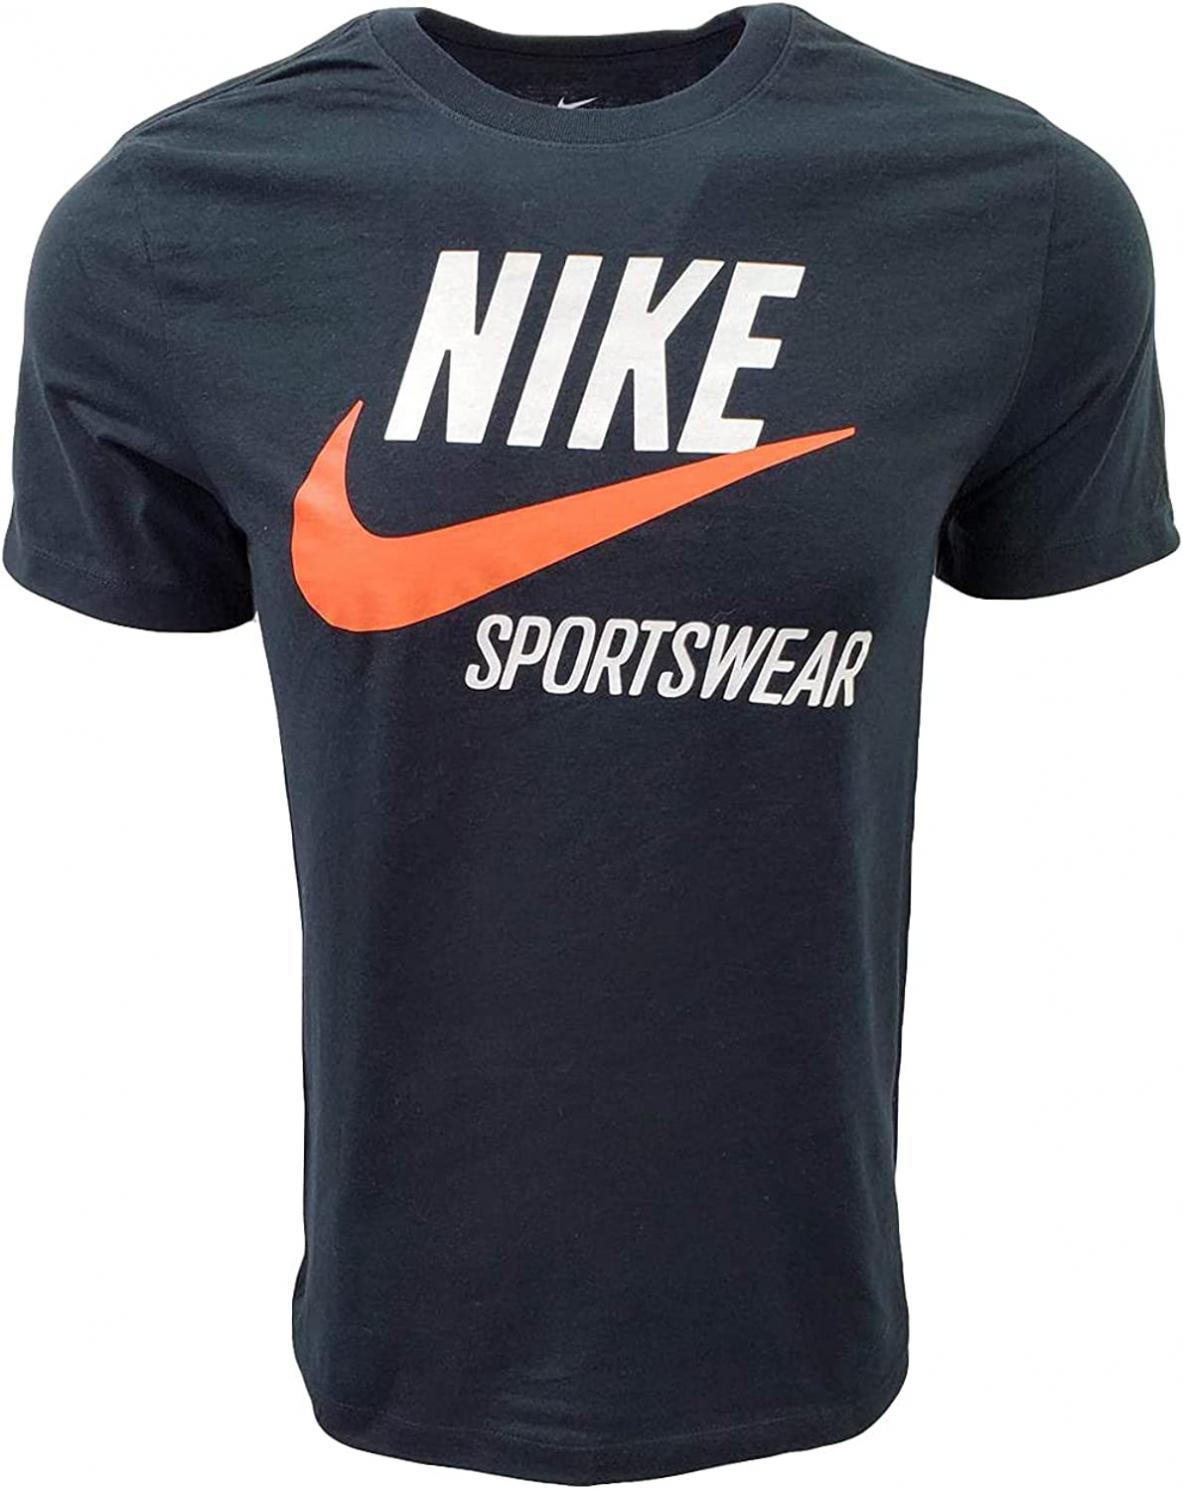 Nike Men Futura Sportswear Logo T-Shirt (Medium, Black/White/Orange)